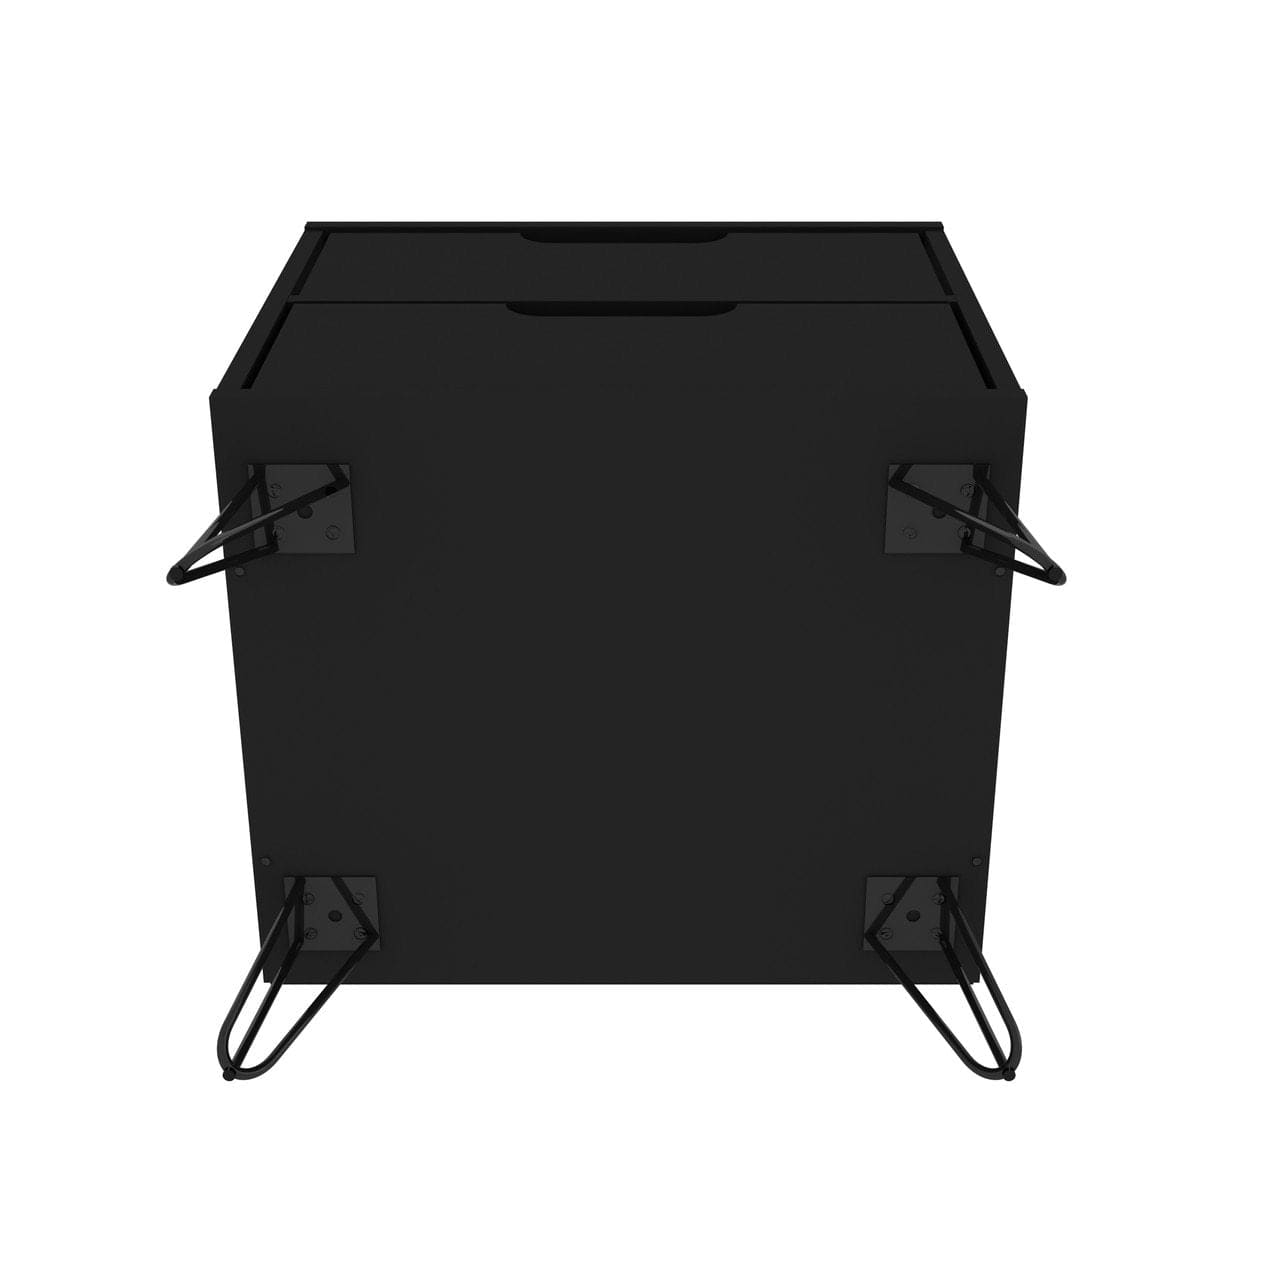 Manhattan Comfort Rockefeller 2.0 Mid-Century Modern 2-Drawer Nightstand in Black 102GMC2 810025592950